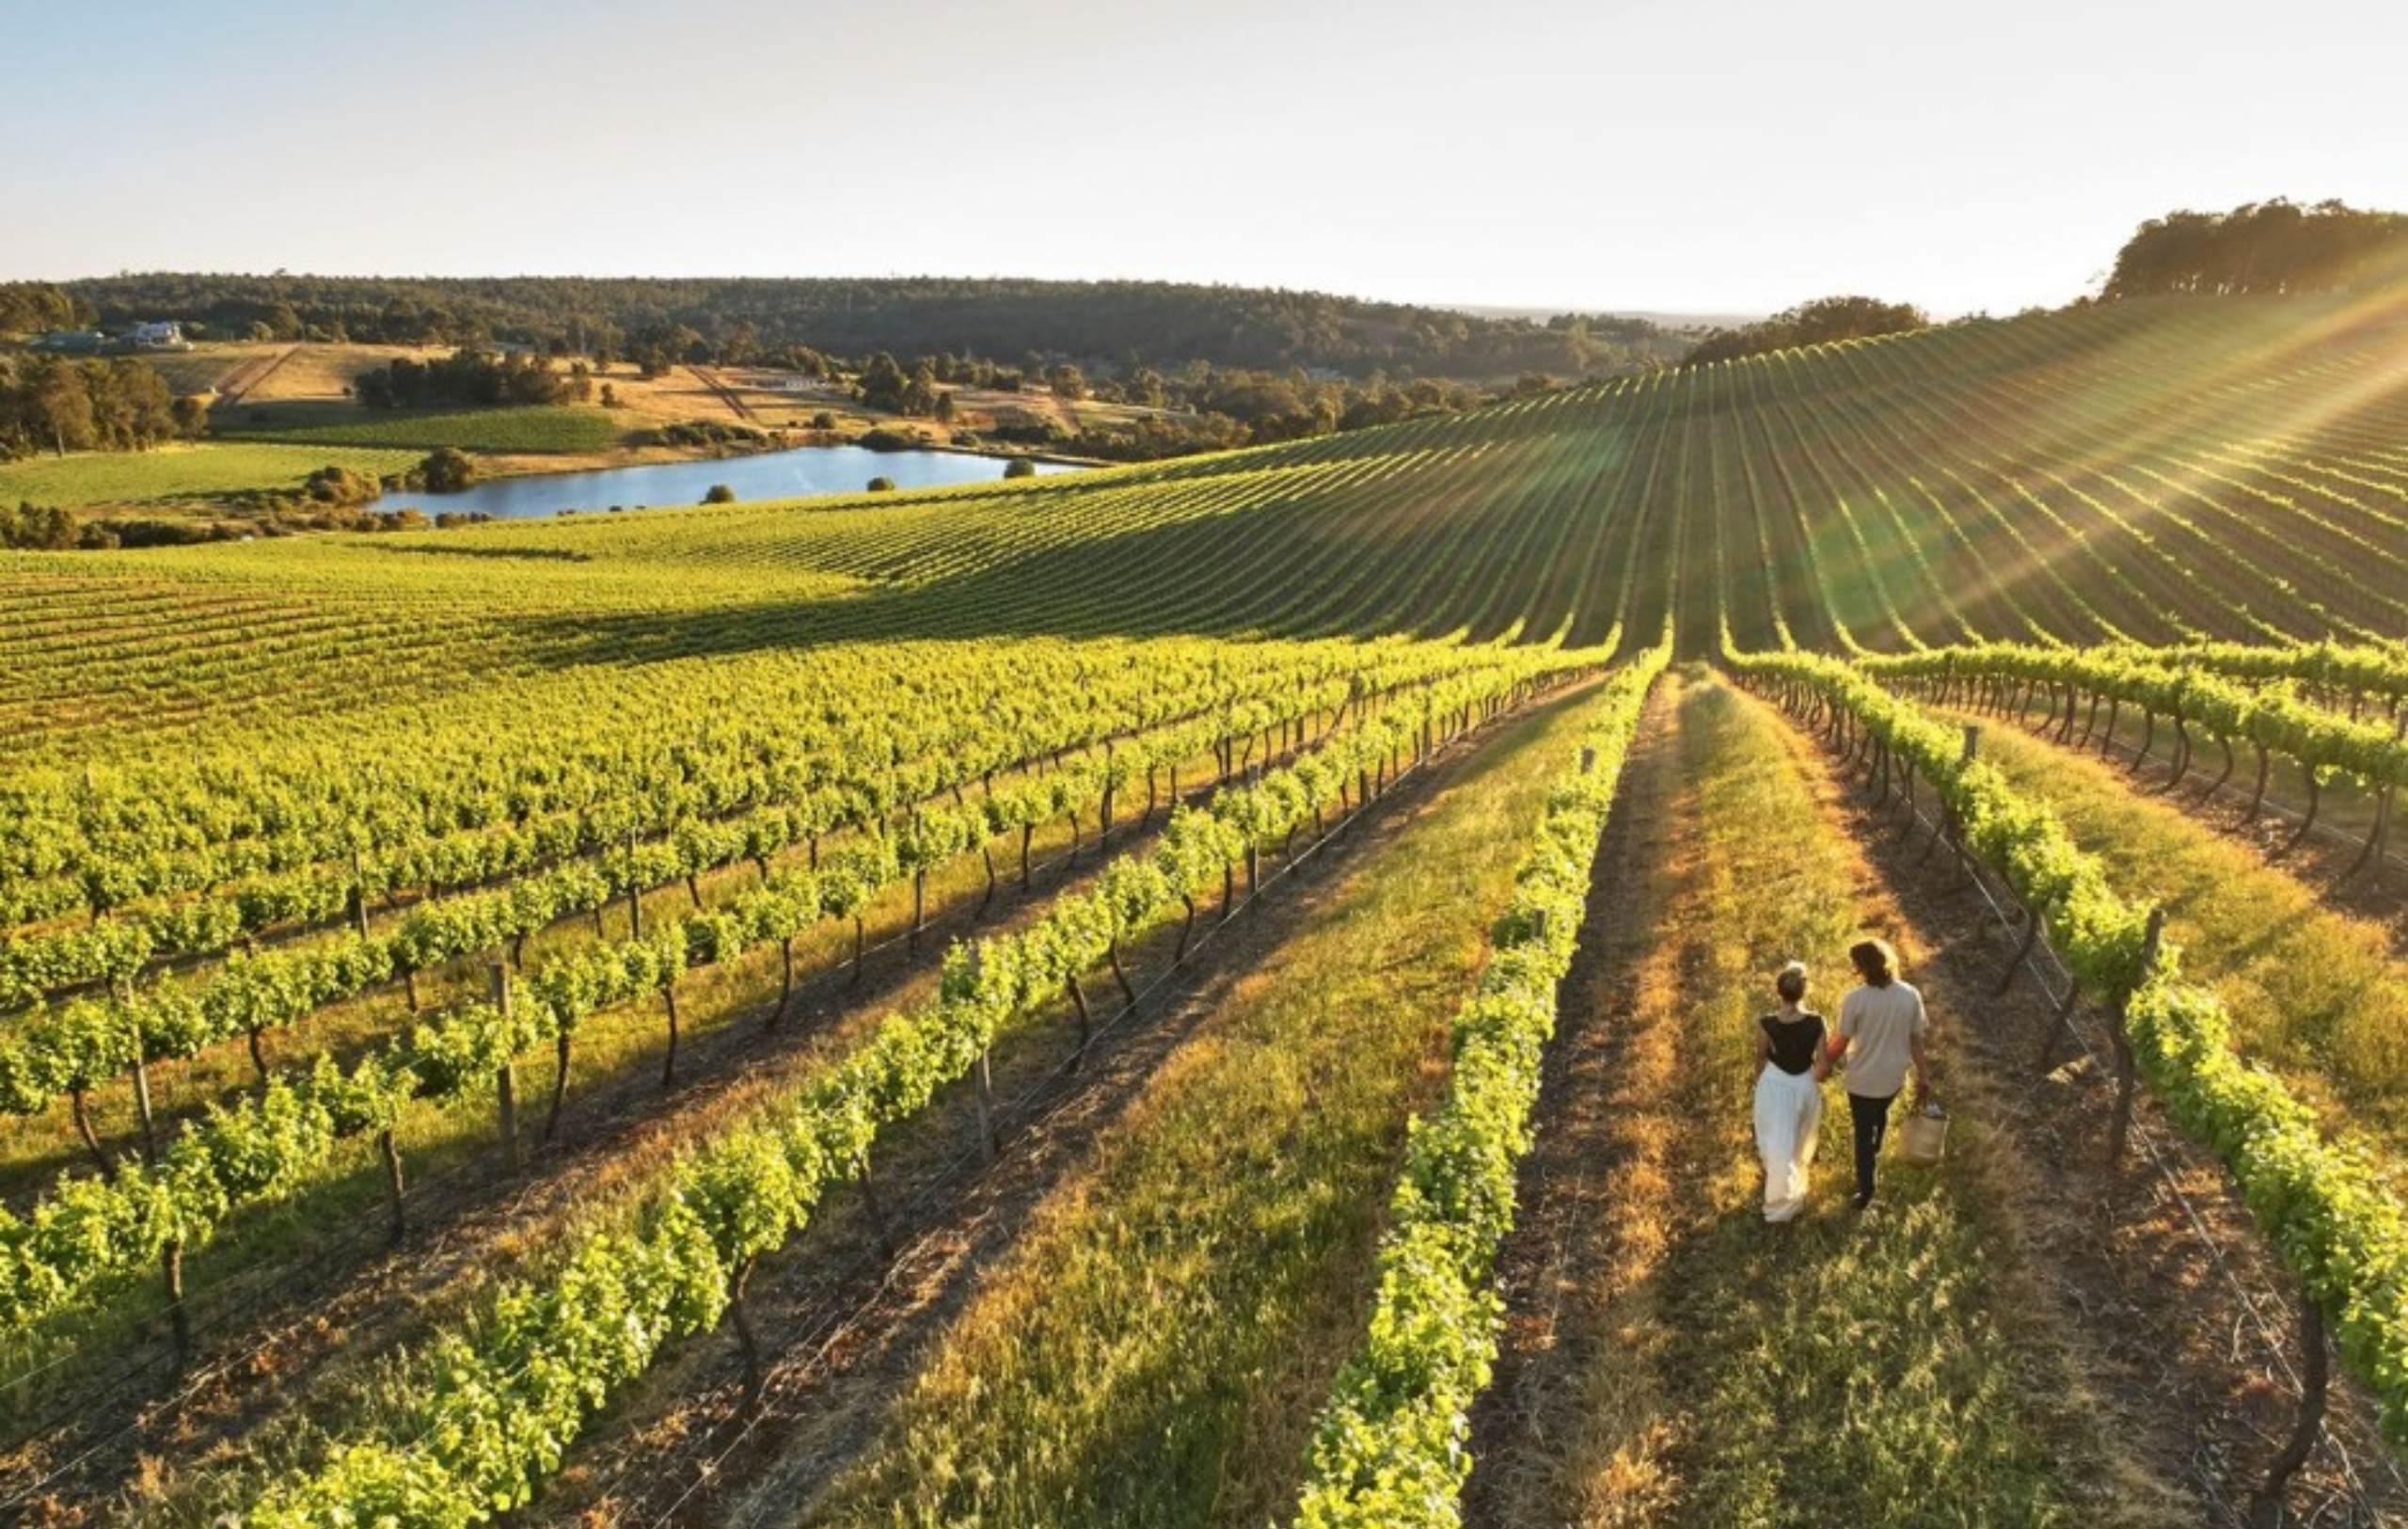 People walking through a vineyard in the Geographe wine region